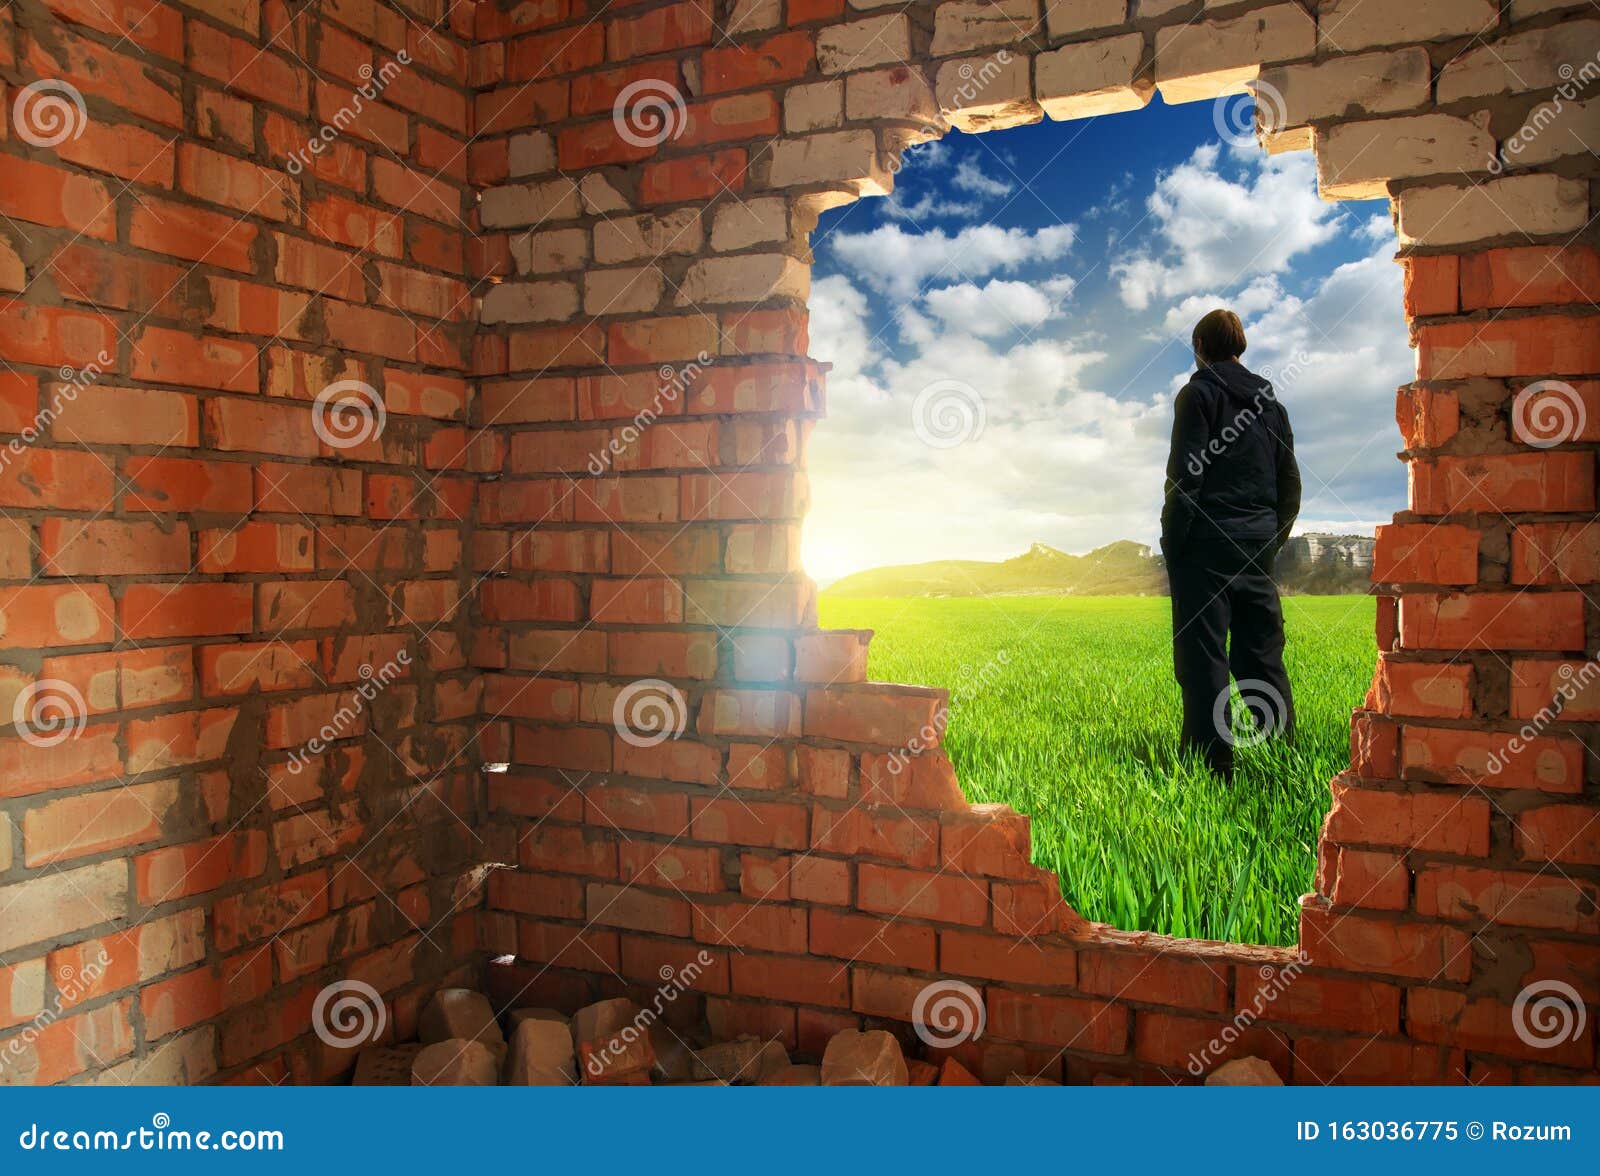 release to freedom. man, standing behind broken brick wall